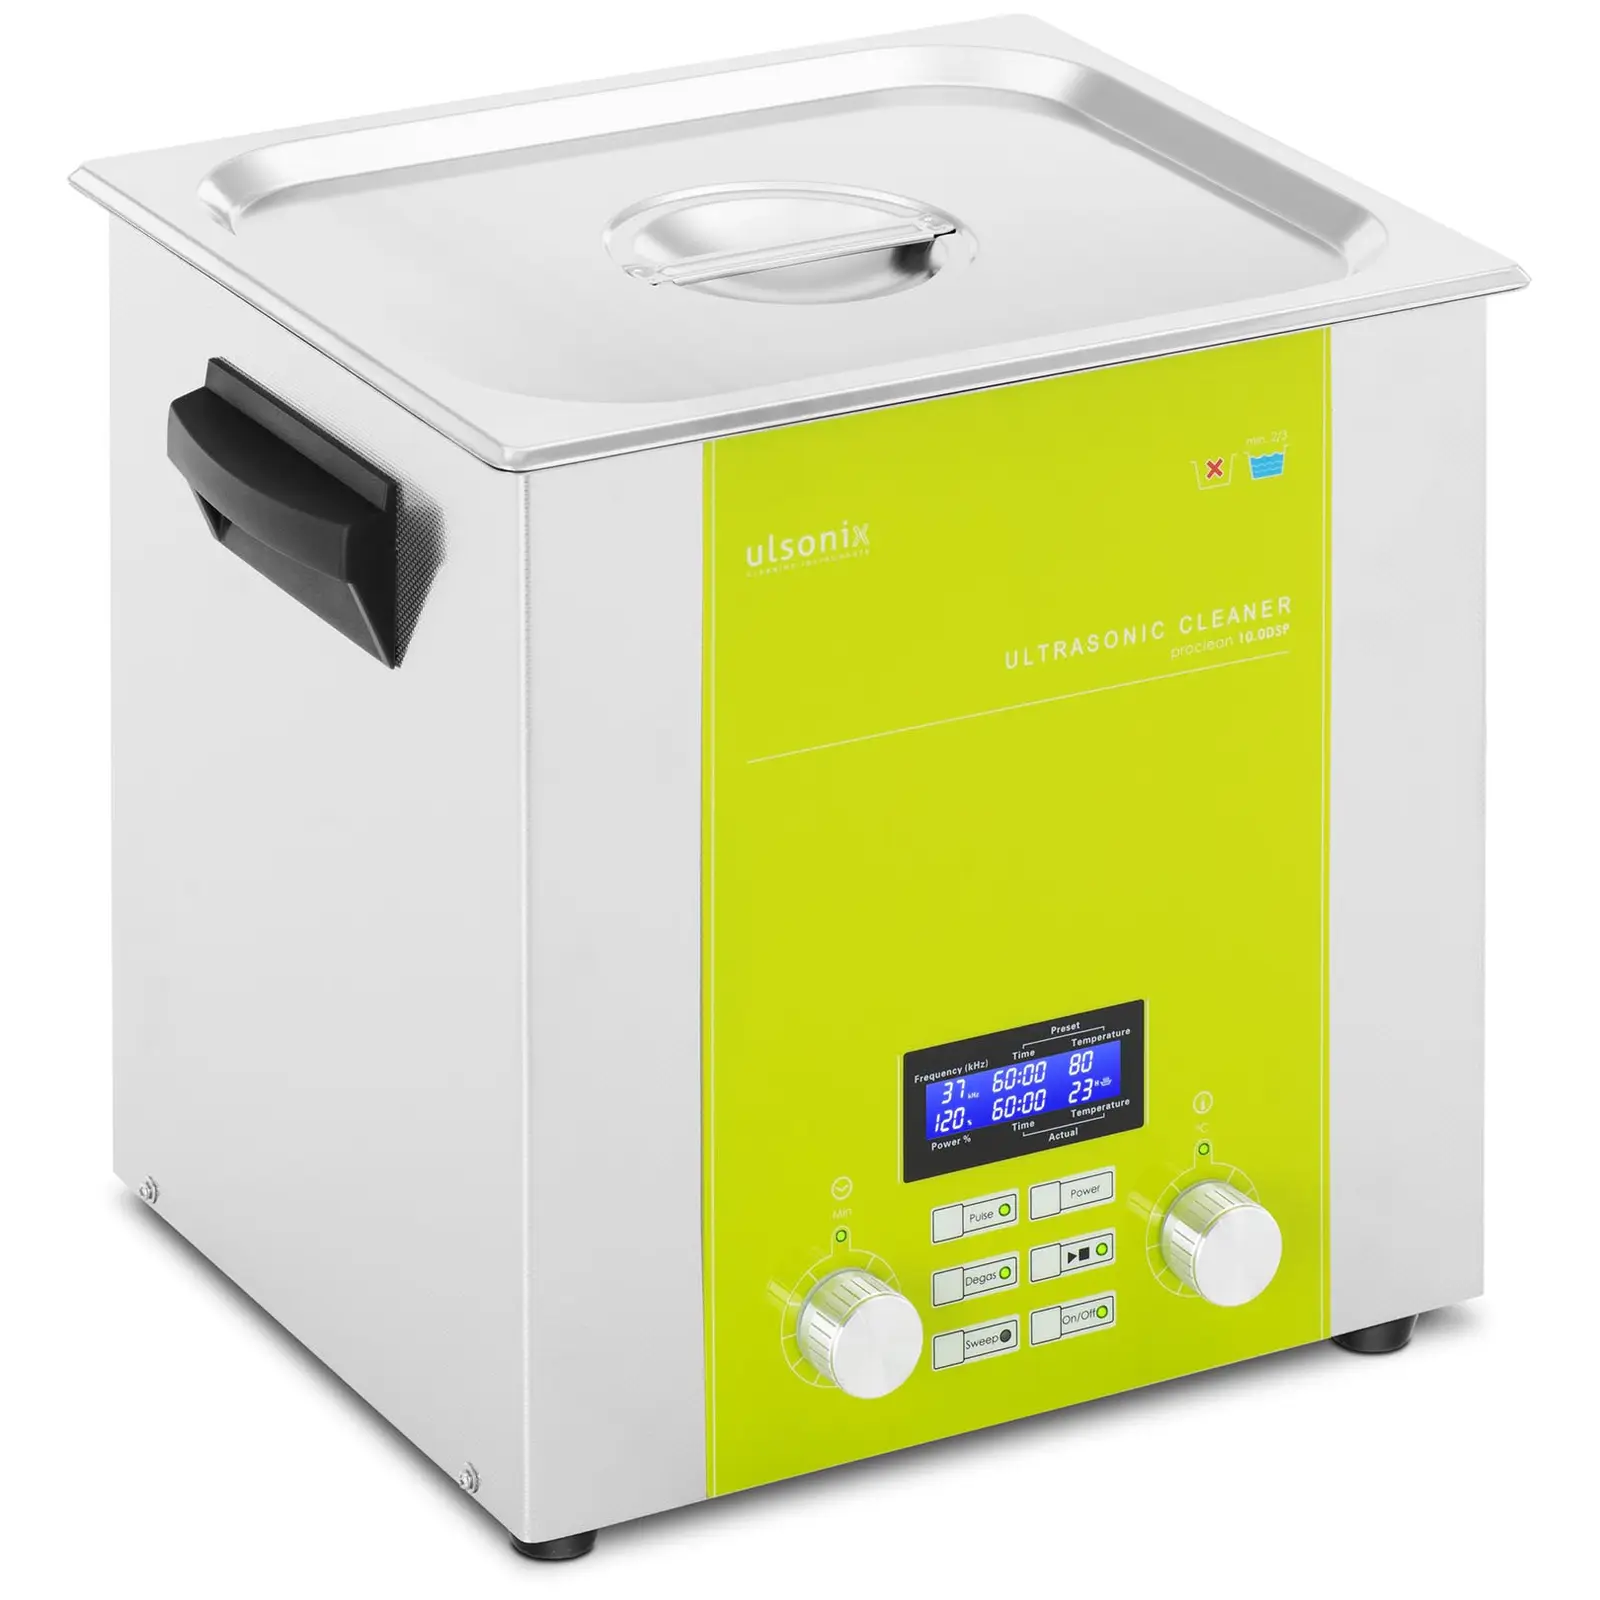 Ultrasonic Cleaner - 10 litres - degas - sweep - pulse